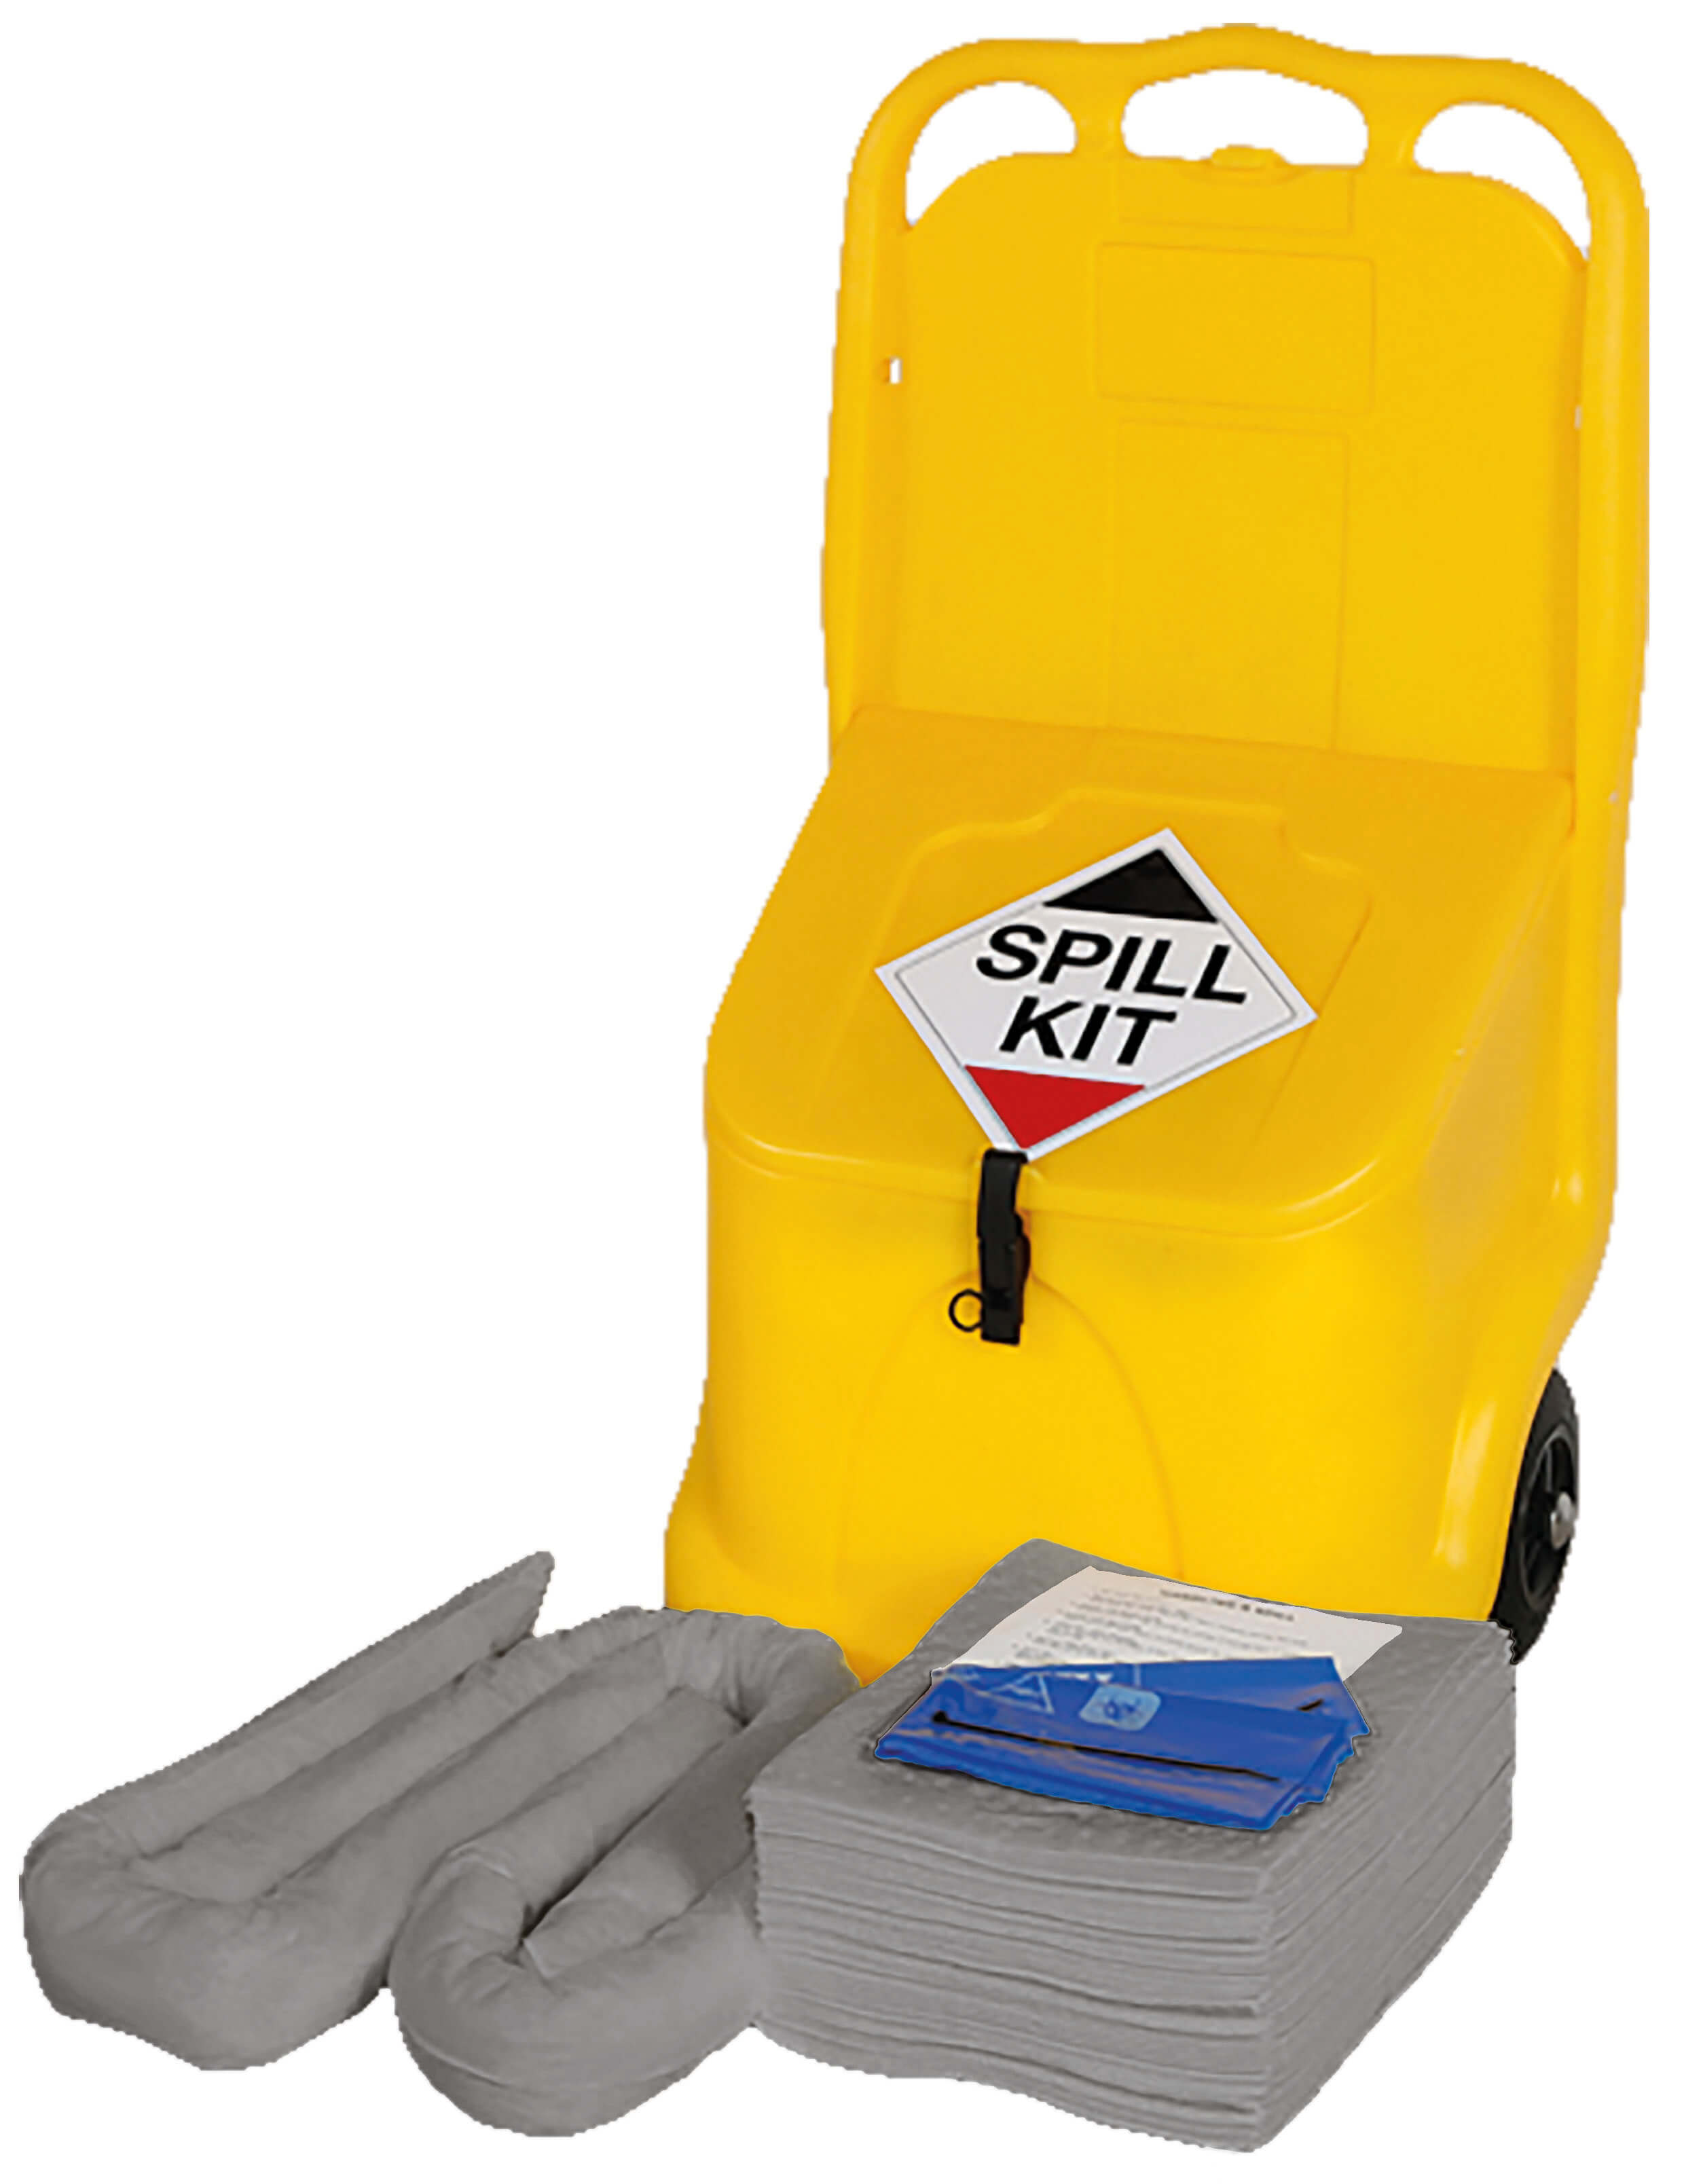 General Purpose Spill Kit in Mobi Locker